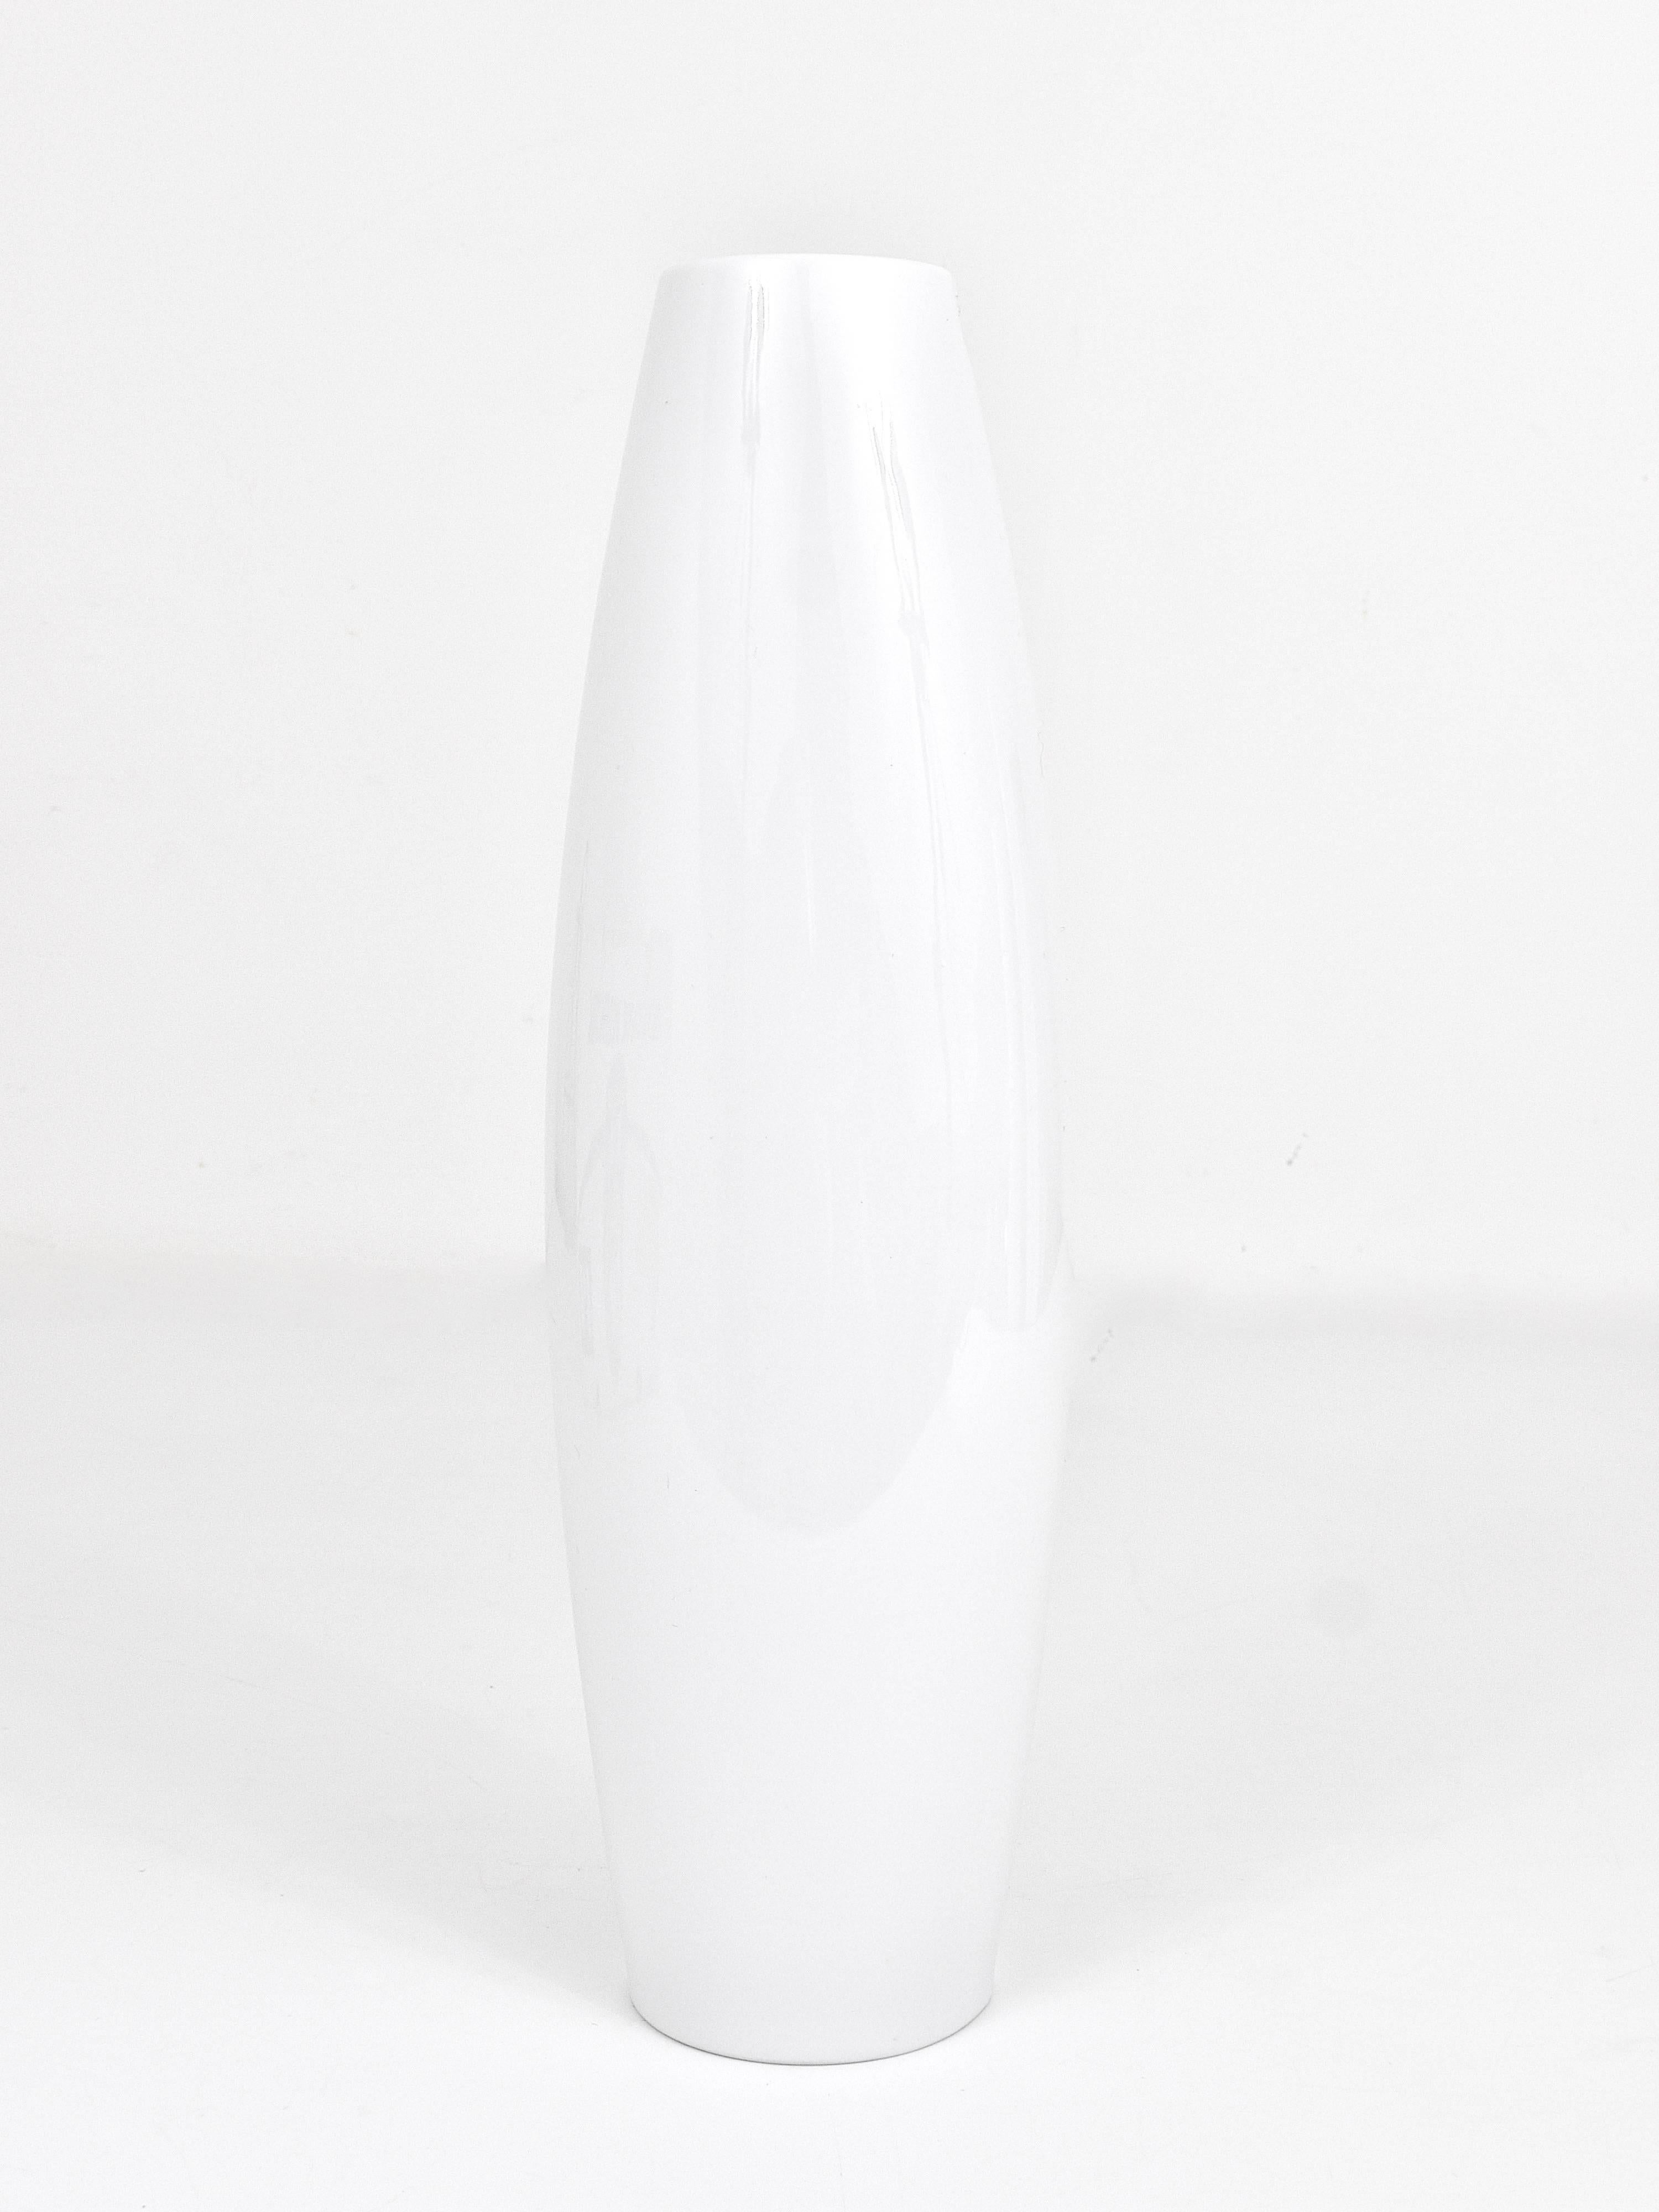 Vase en porcelaine Op Art Cuno Fischer Rosenthal Studio-Linie White Relief, années 1960 en vente 1